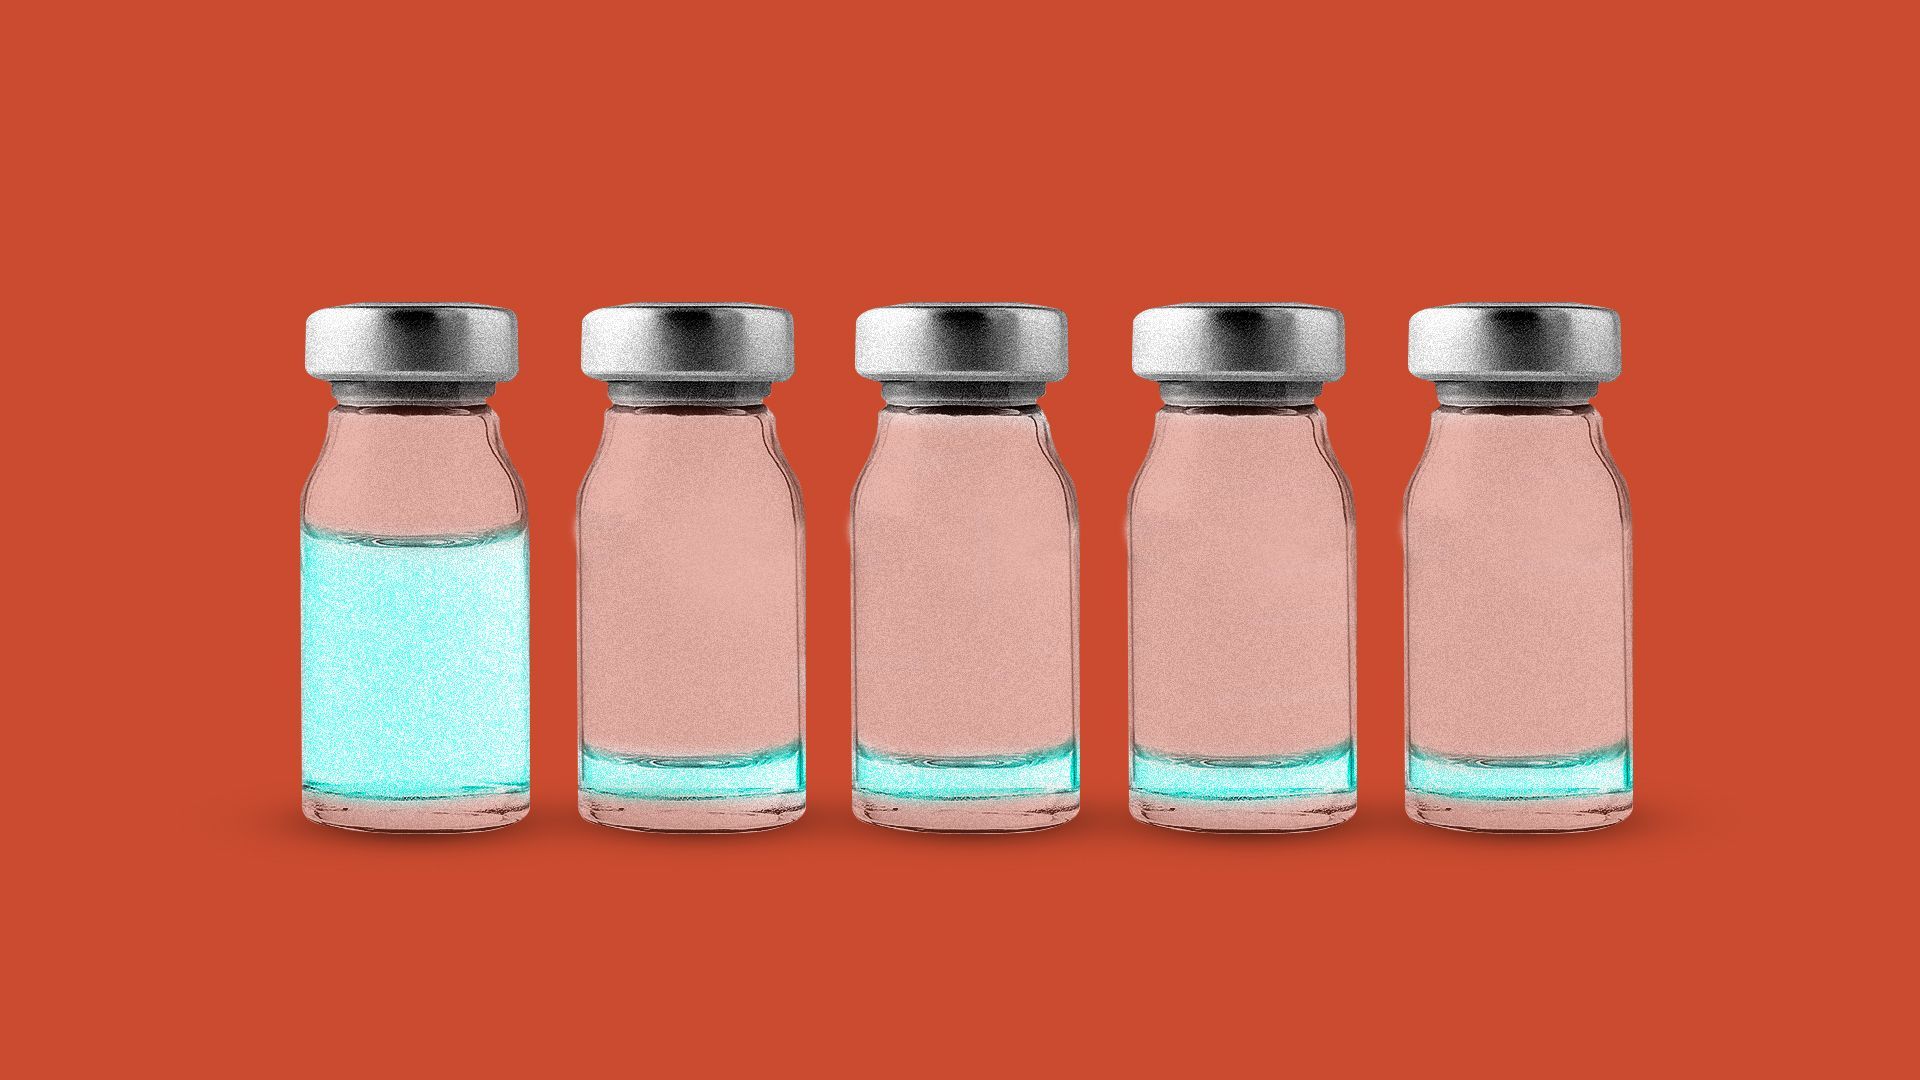 Illustration of 5 vaccine bottles, 4 are empty. 